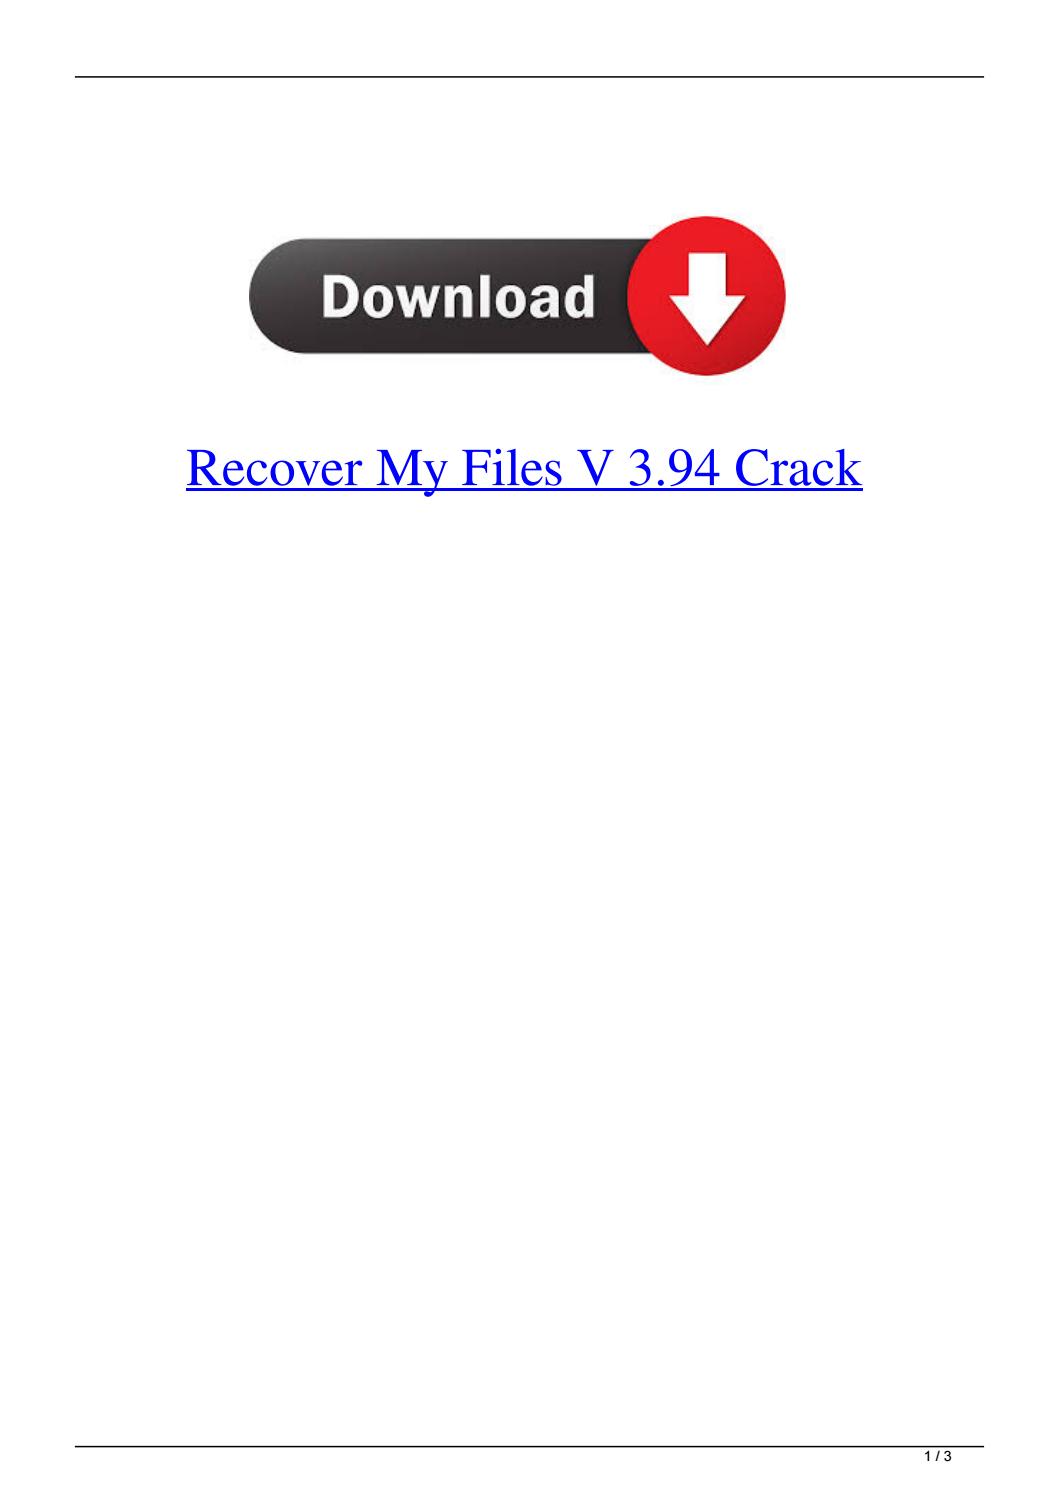 Download Bpm Studio Pro Full Version With Crack 2014